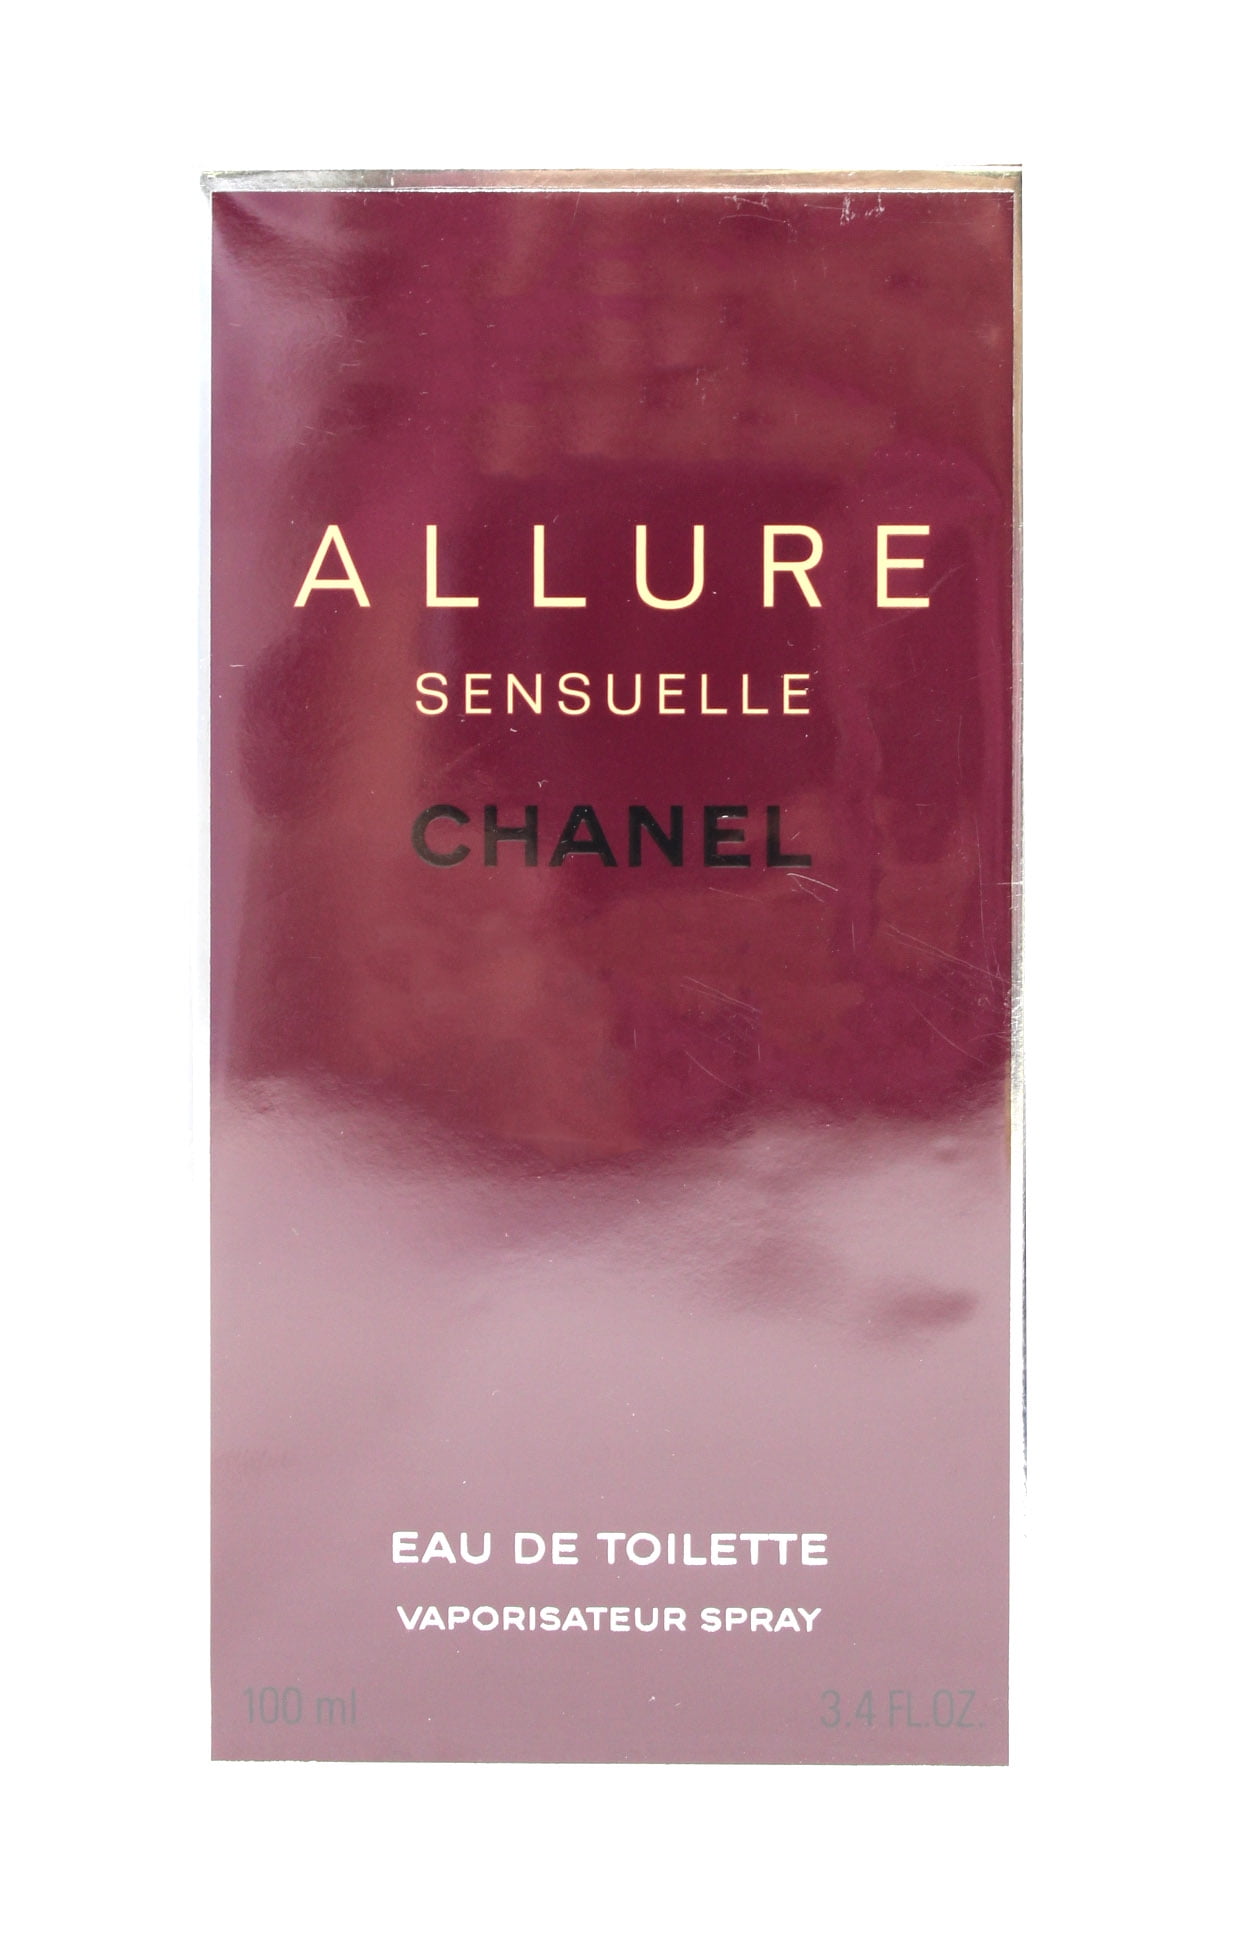  ALLURE SENSUELLE by Chanel EDT SPRAY 3.4 OZTESTER